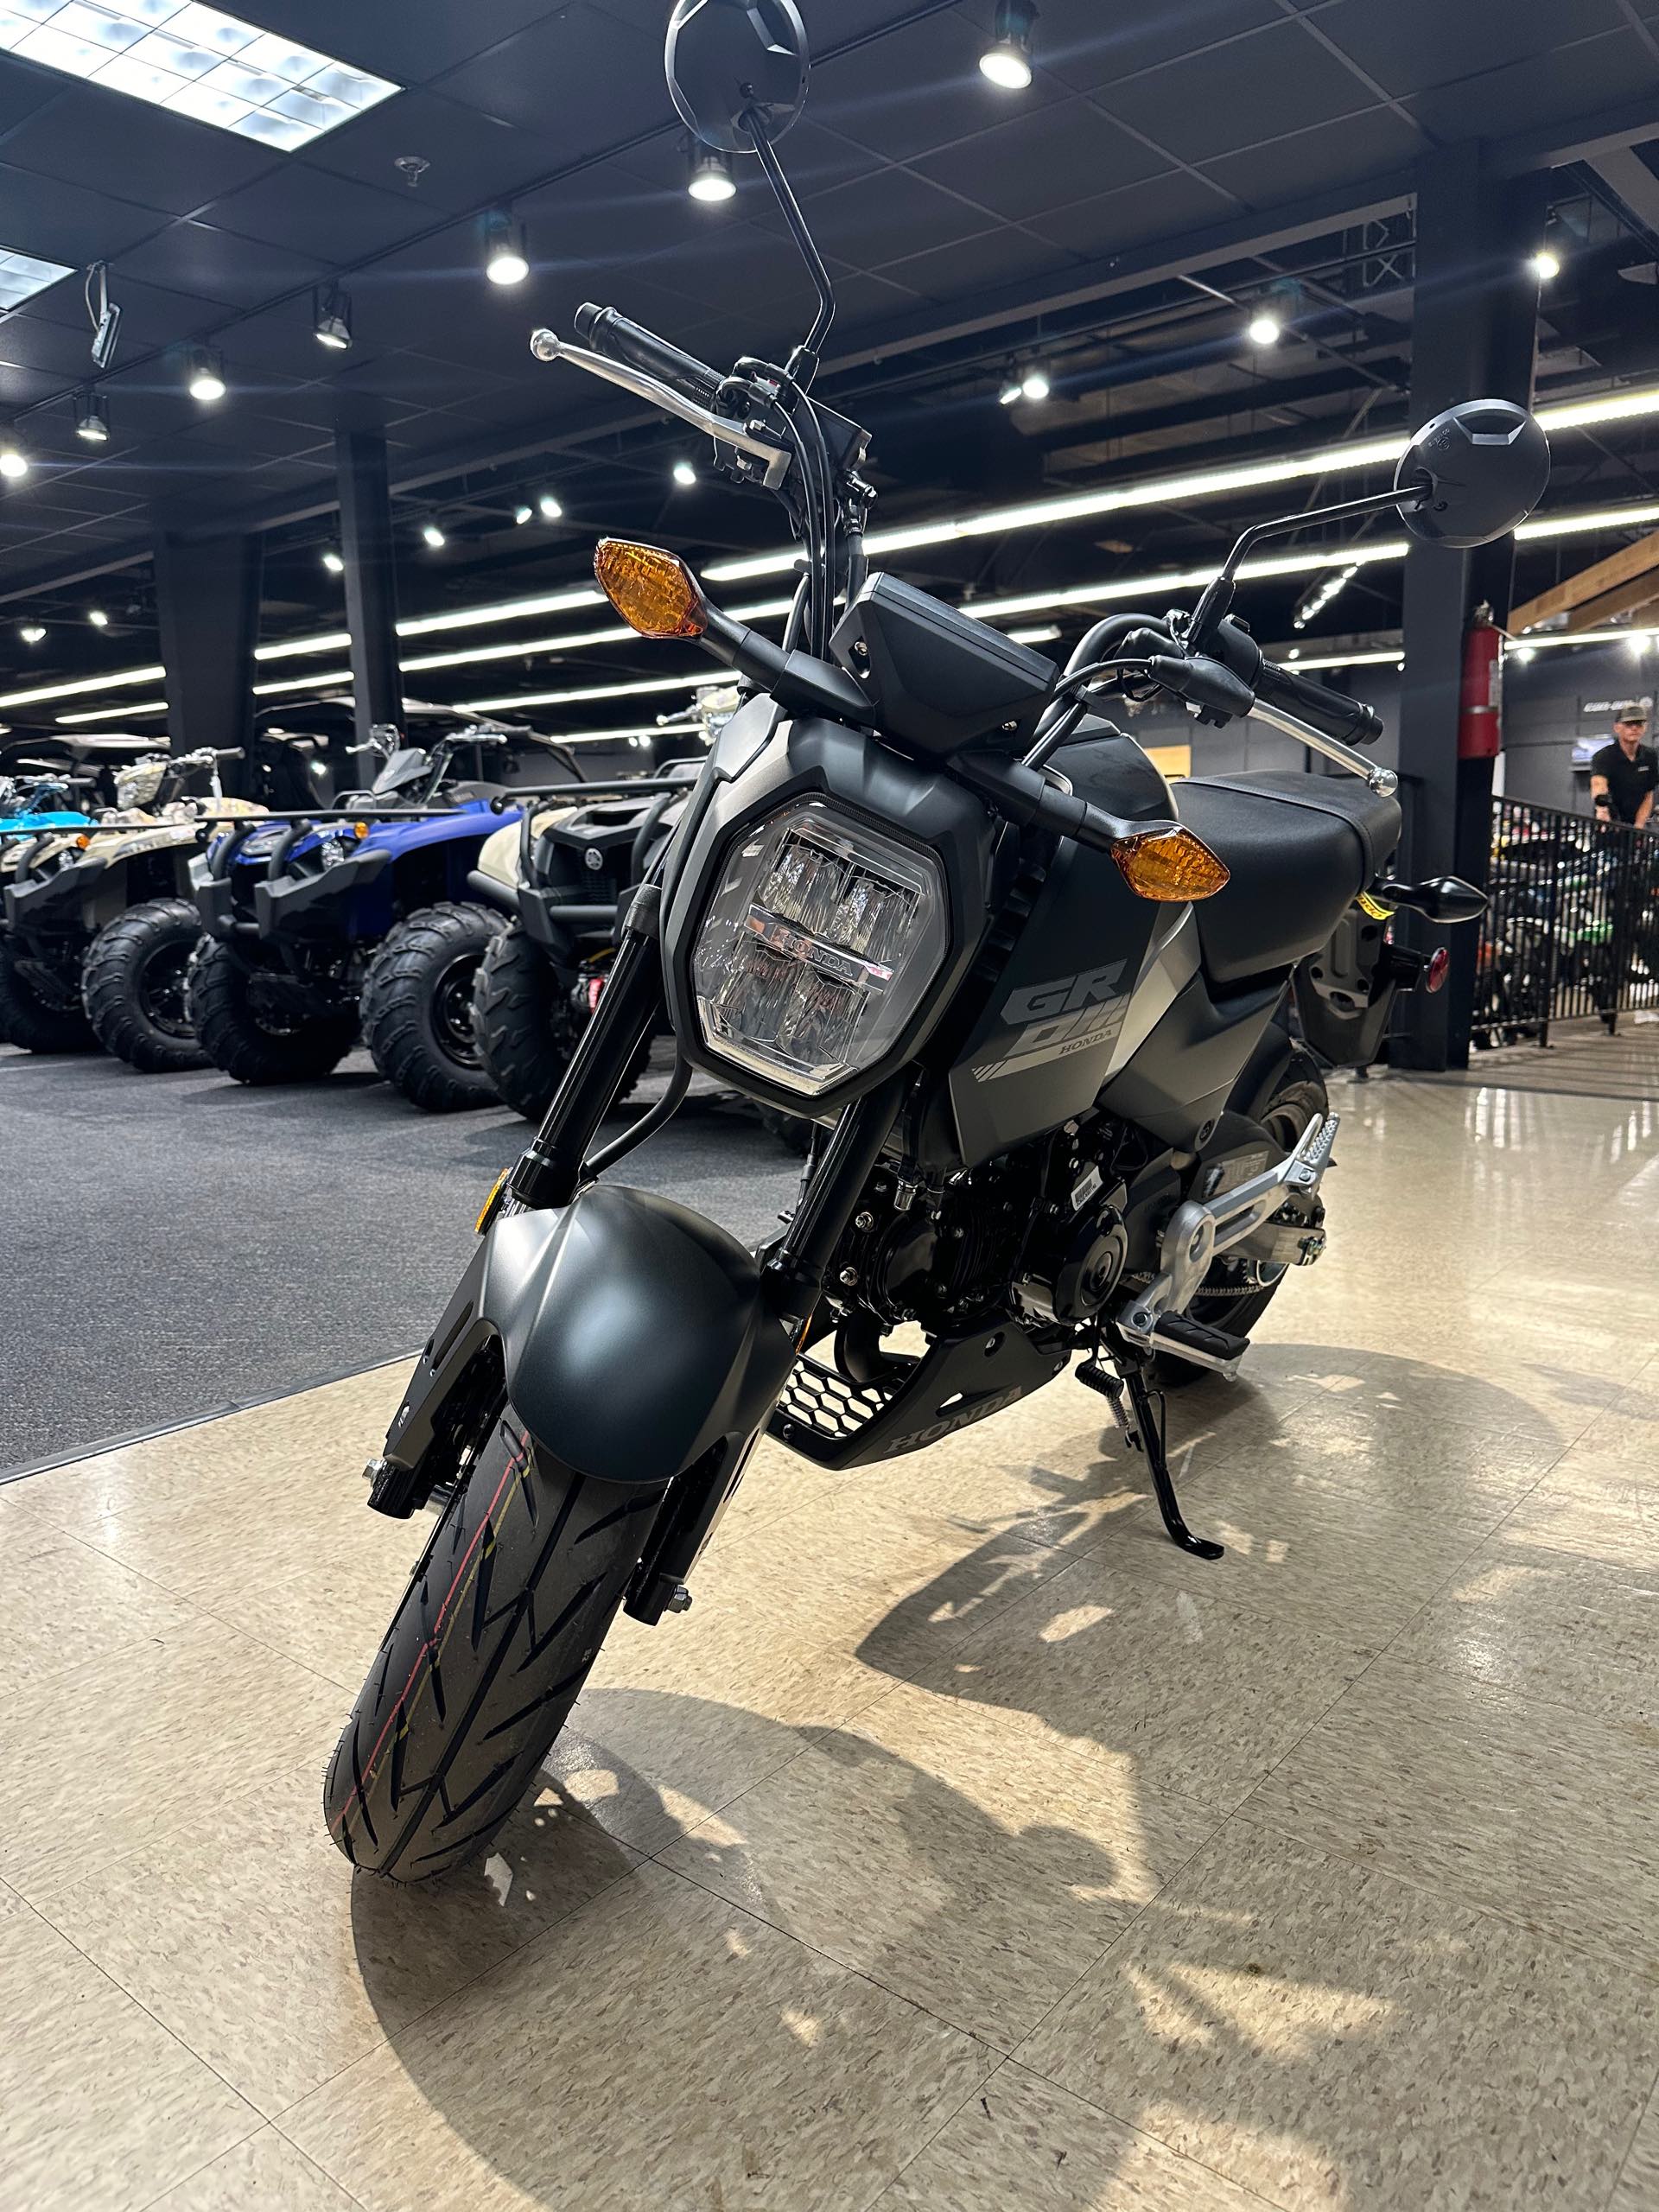 2025 Honda Grom SP at Sloans Motorcycle ATV, Murfreesboro, TN, 37129